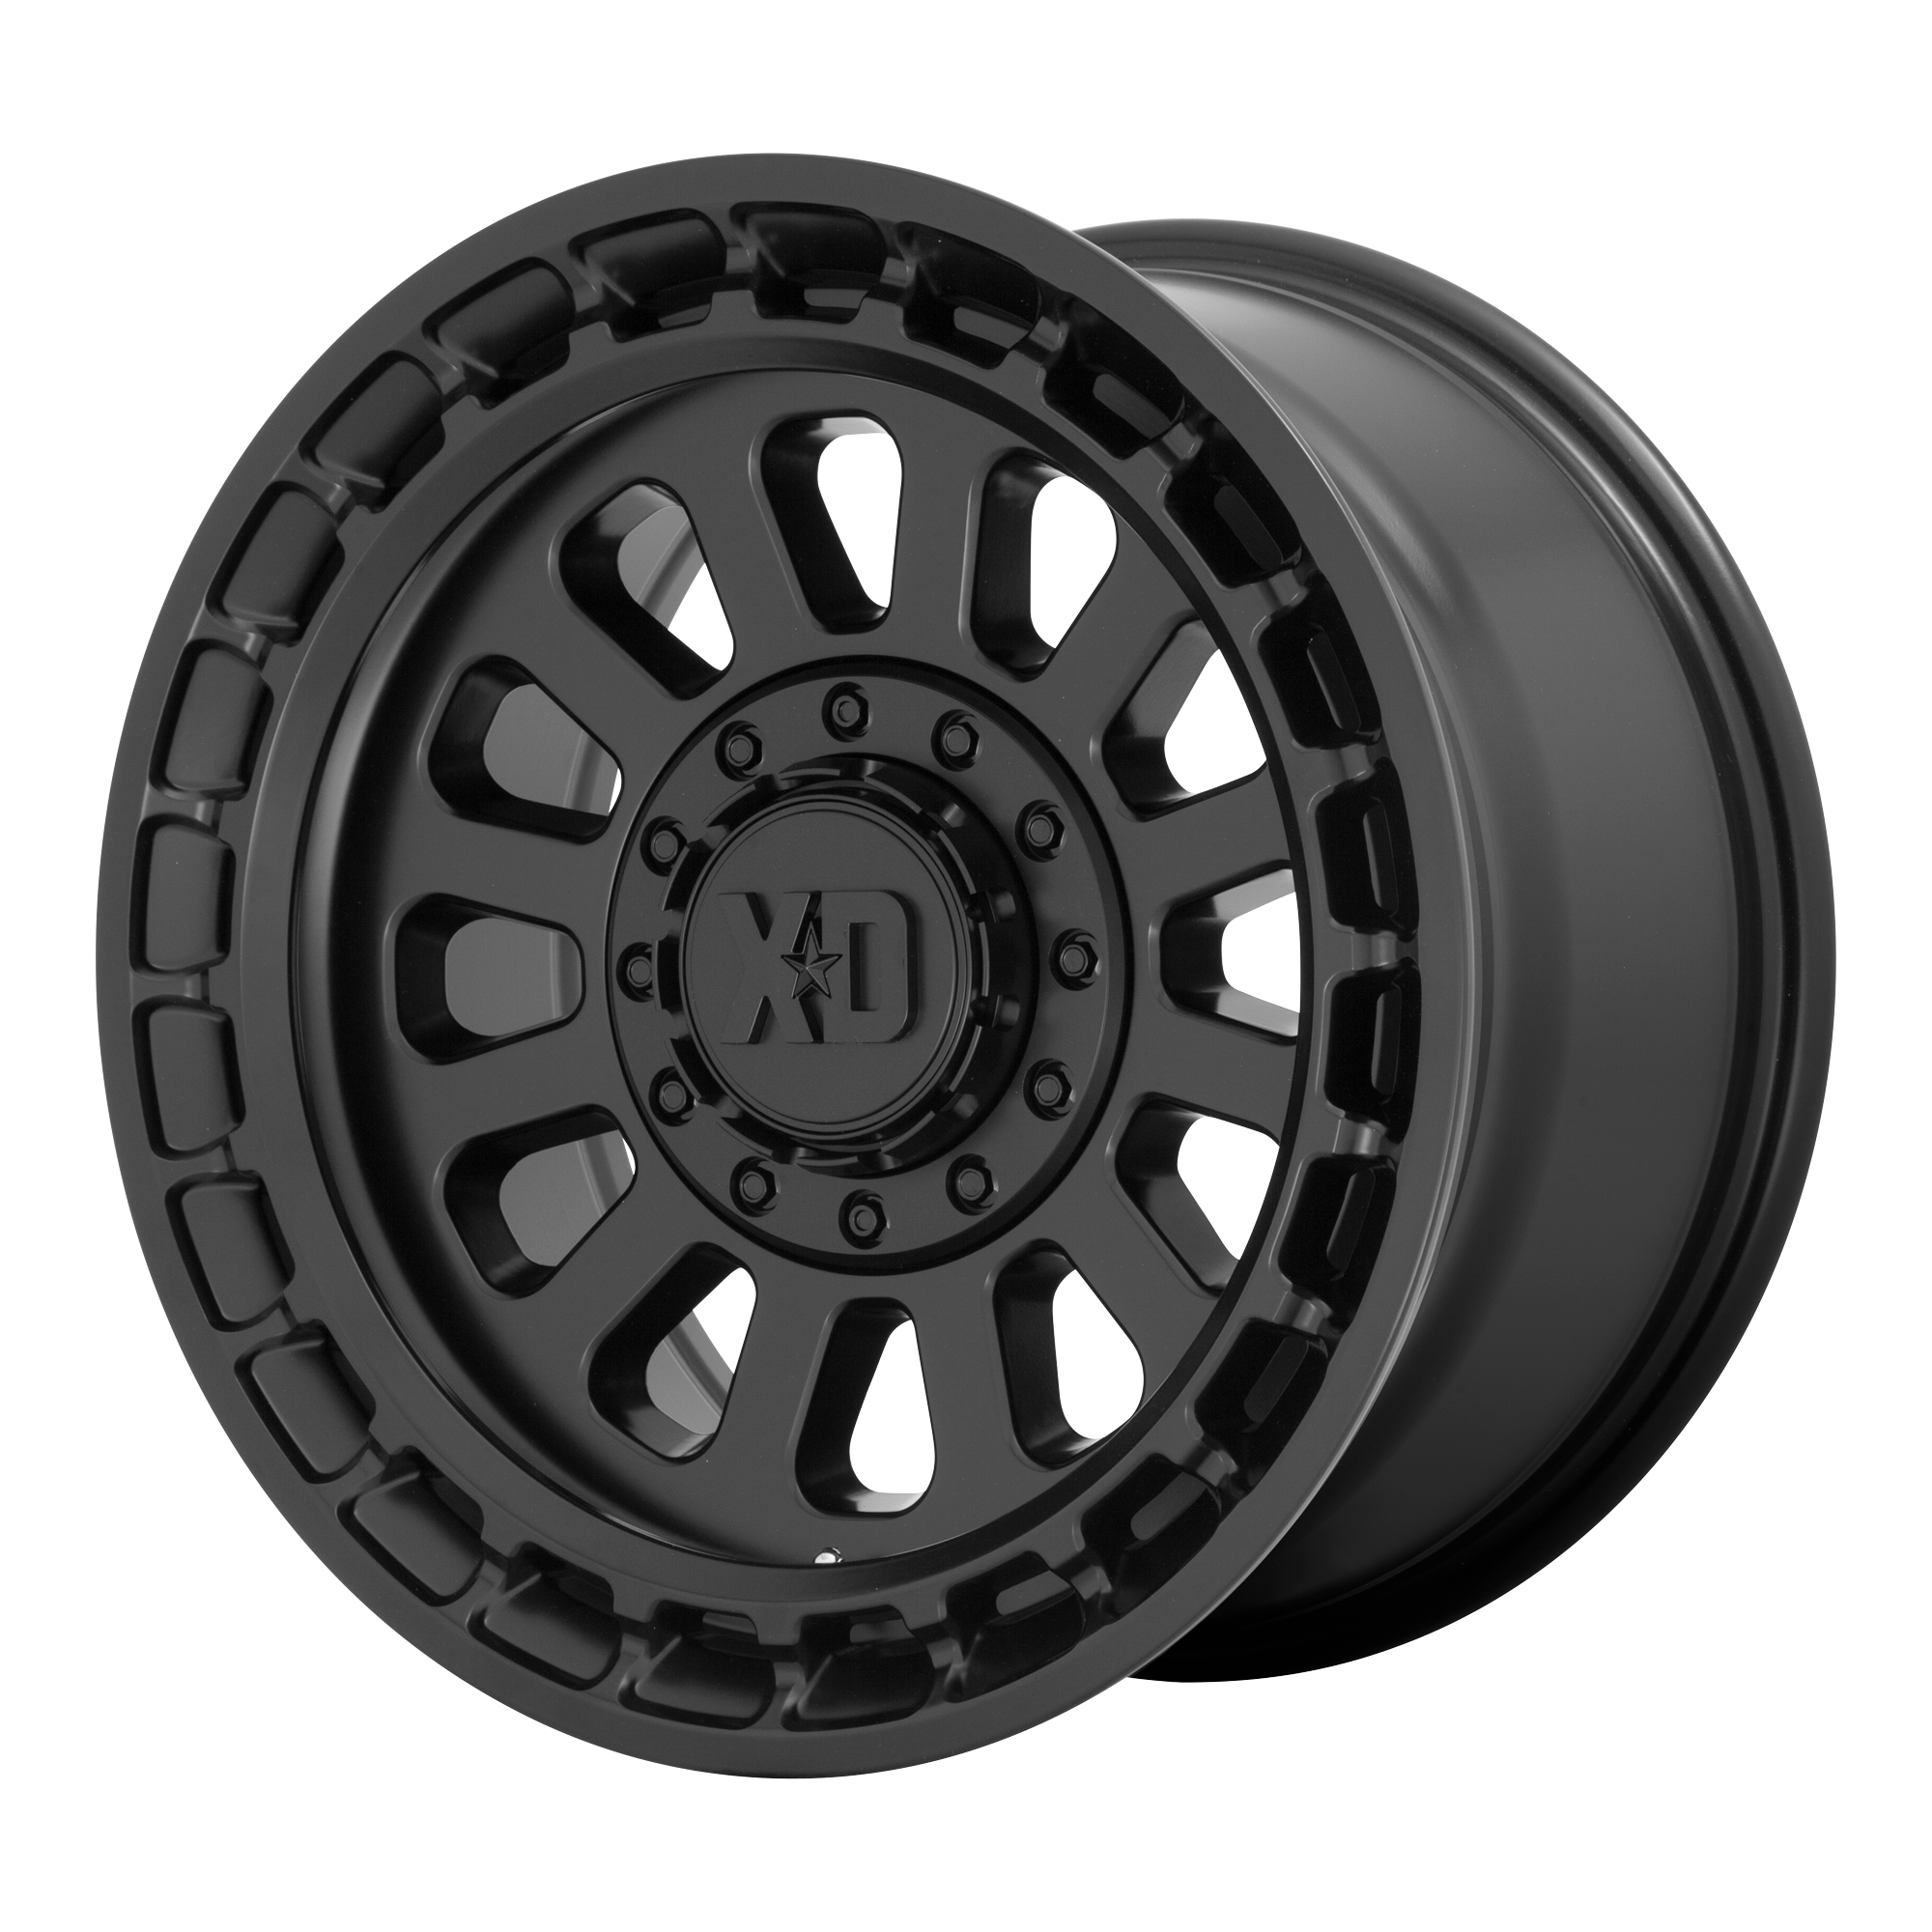 XD 20"x10" Non-Chrome Satin Black Custom Wheel ARSWCWXD85621086718N